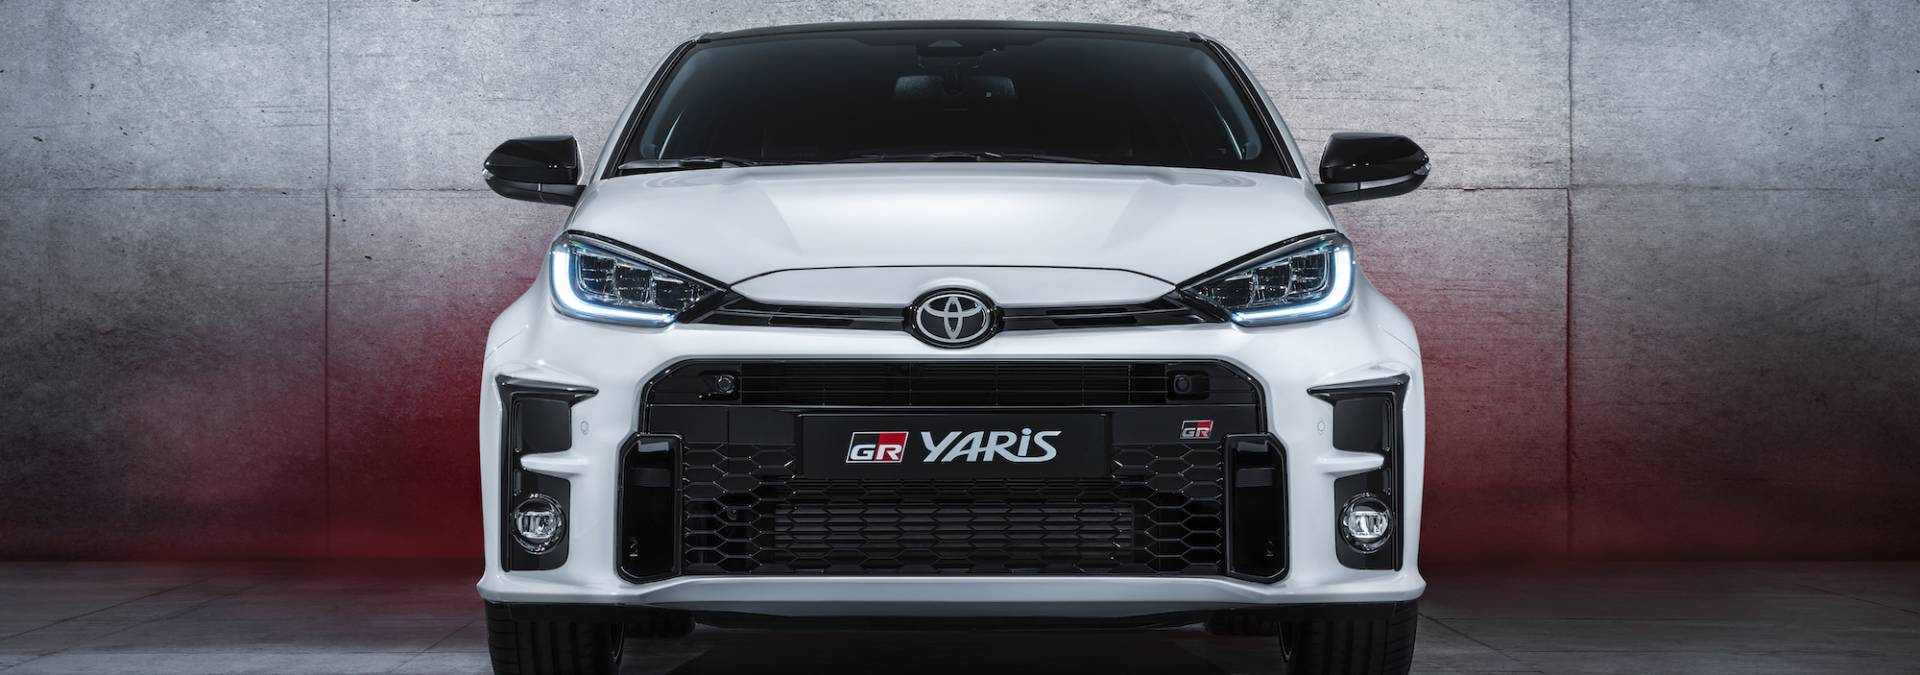 Ruszyła produkcja hot hatcha Toyota GR Yaris